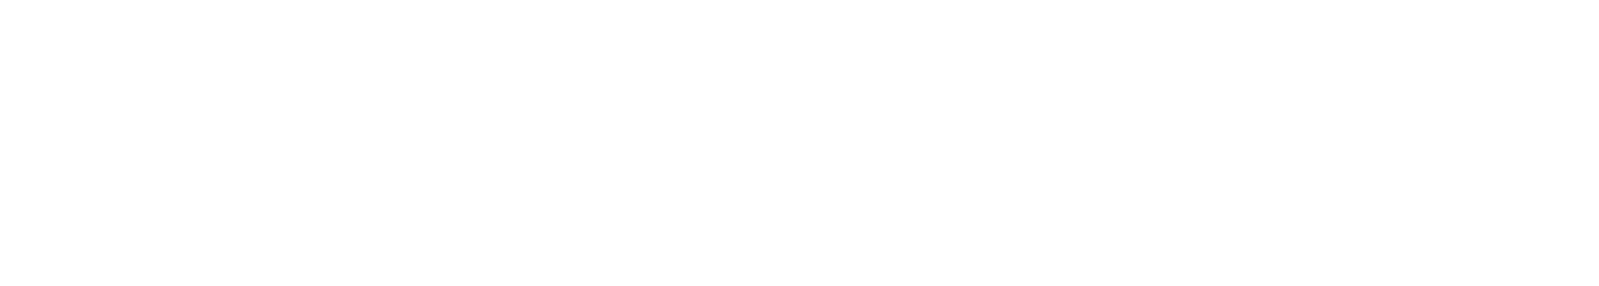 Gestamp Automoción Logo groß für dunkle Hintergründe (transparentes PNG)